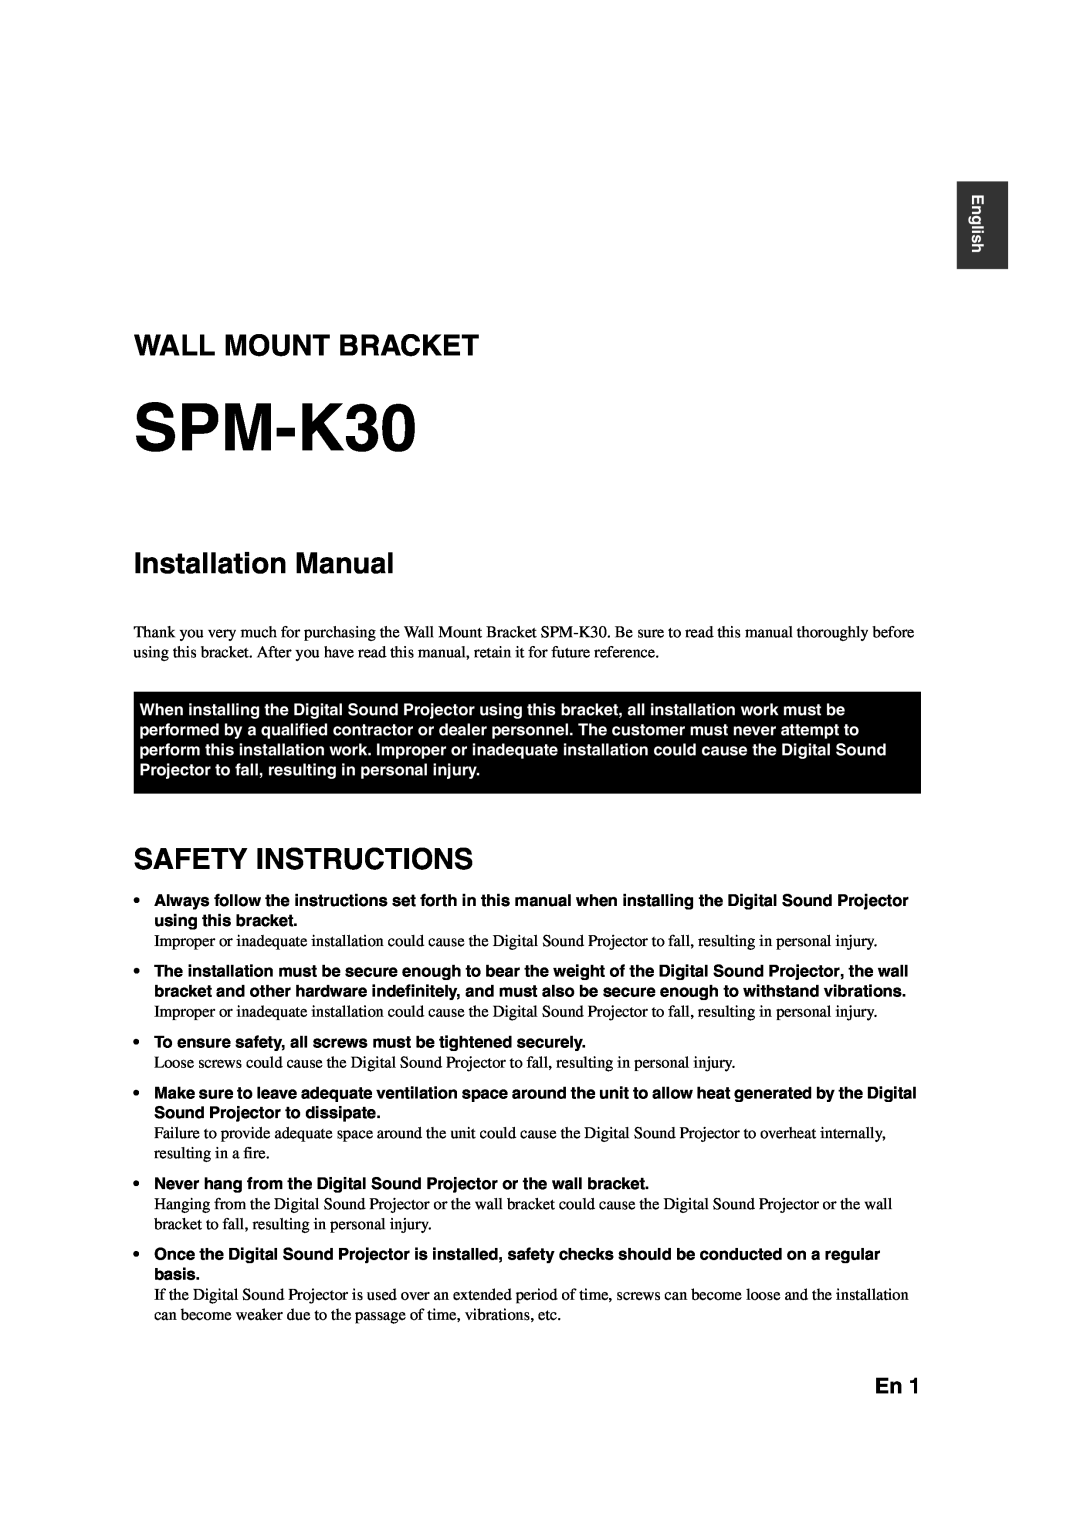 Yamaha SPMK30 installation manual Wall Mount Bracket, Installation Manual, Safety Instructions, English, SPM-K30 